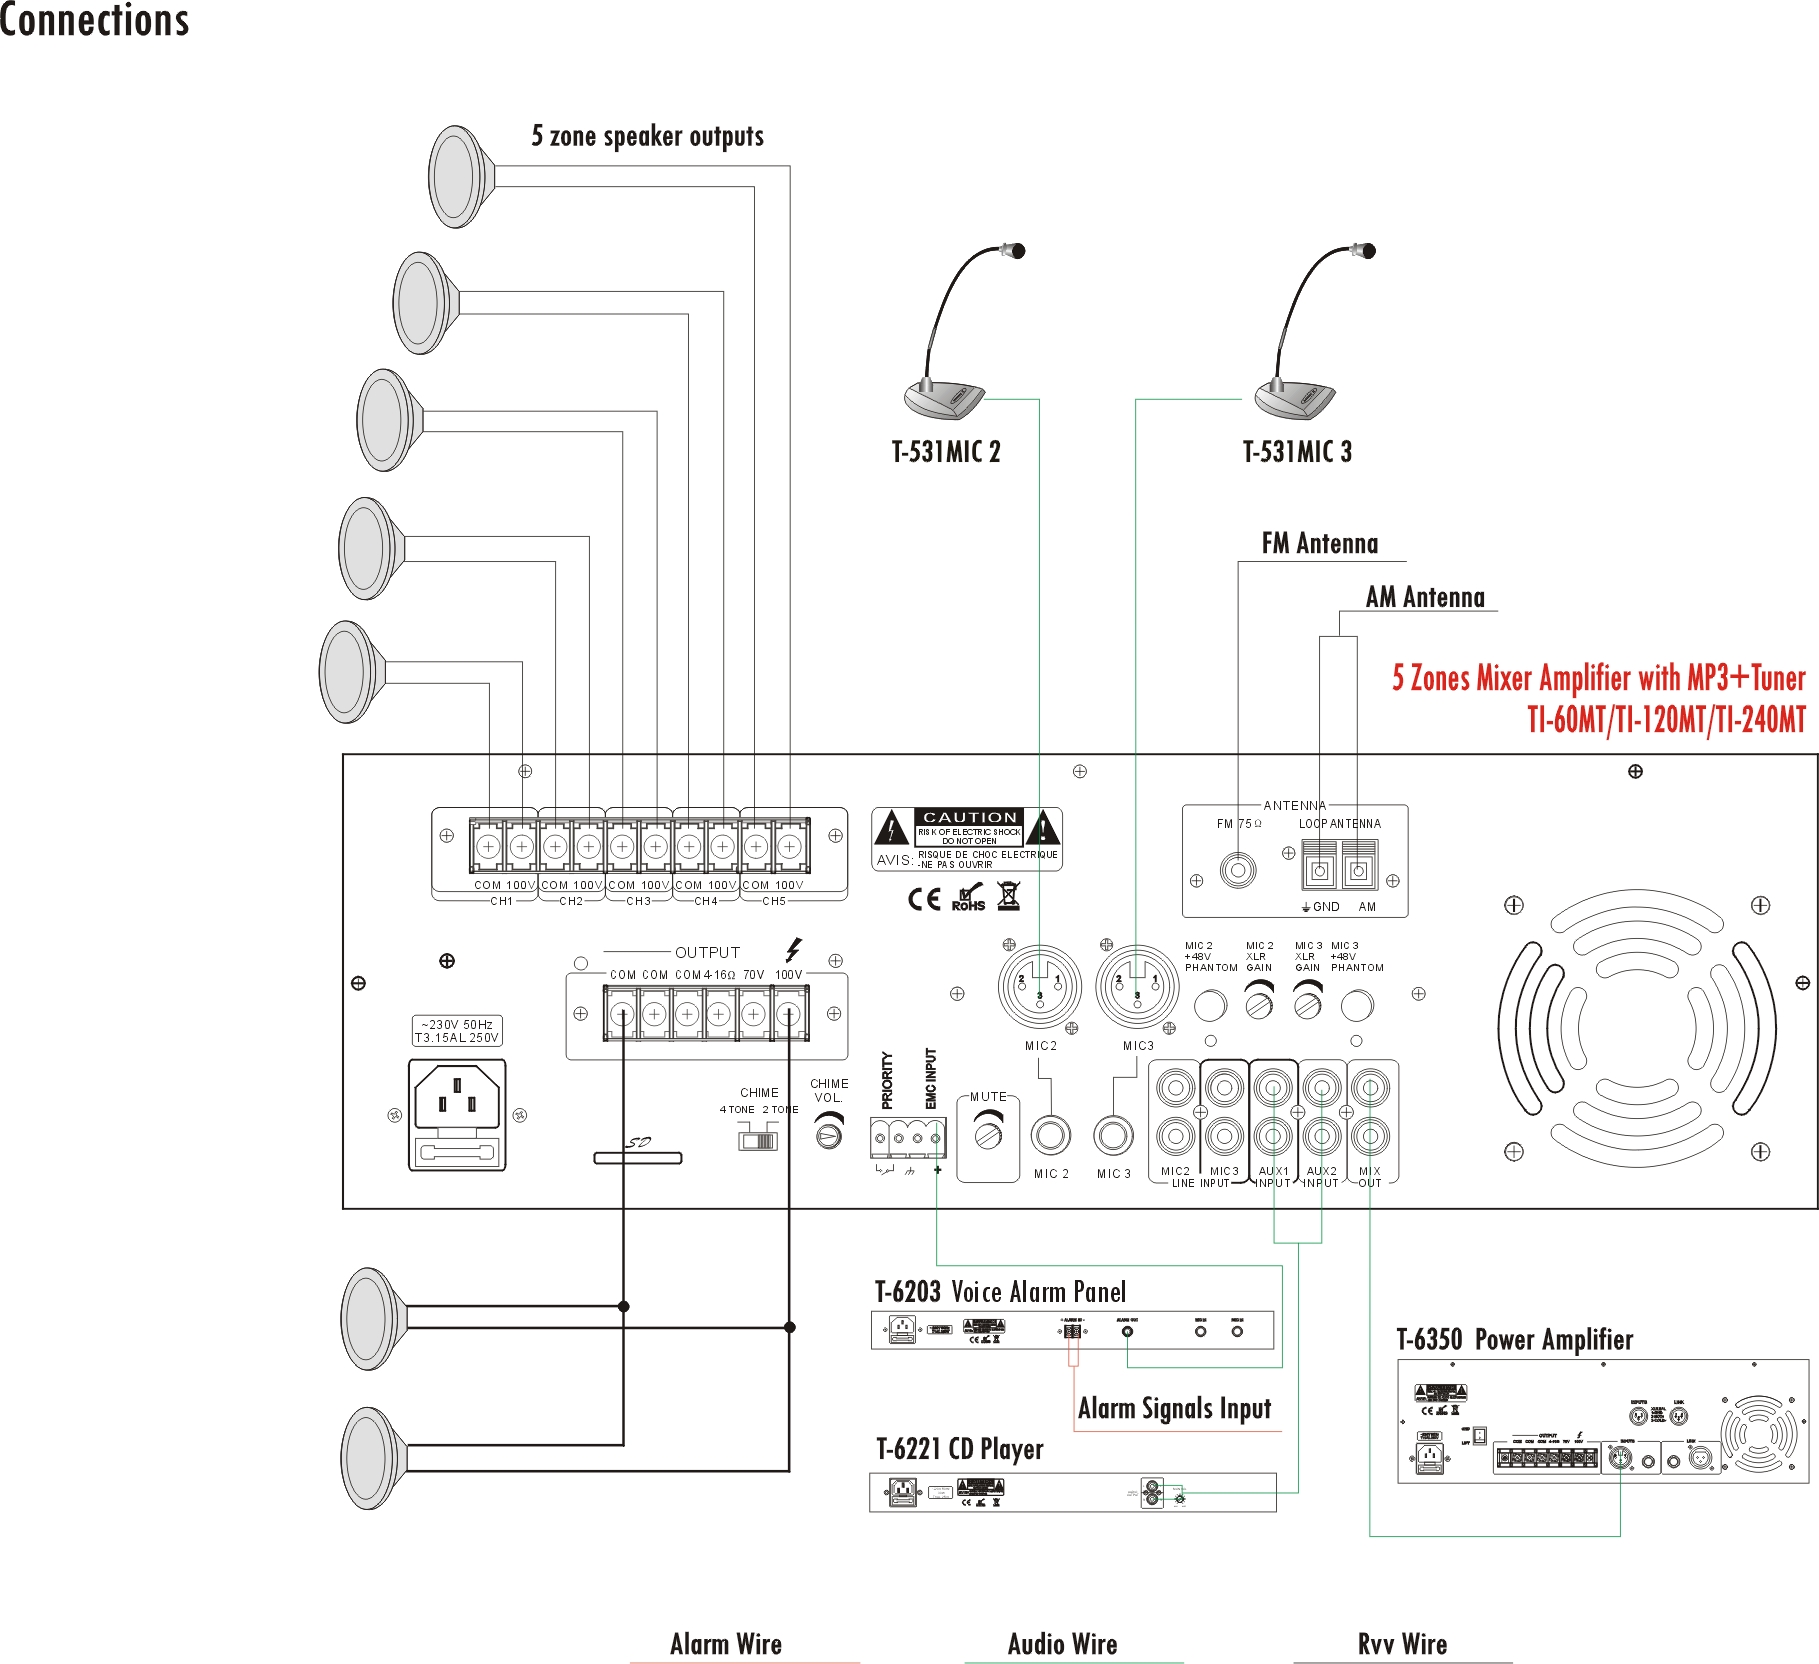 ITC TI-60MT TI-120MT TI-240MT 5 Zones Mixer Amplifier with MP3+Tuner